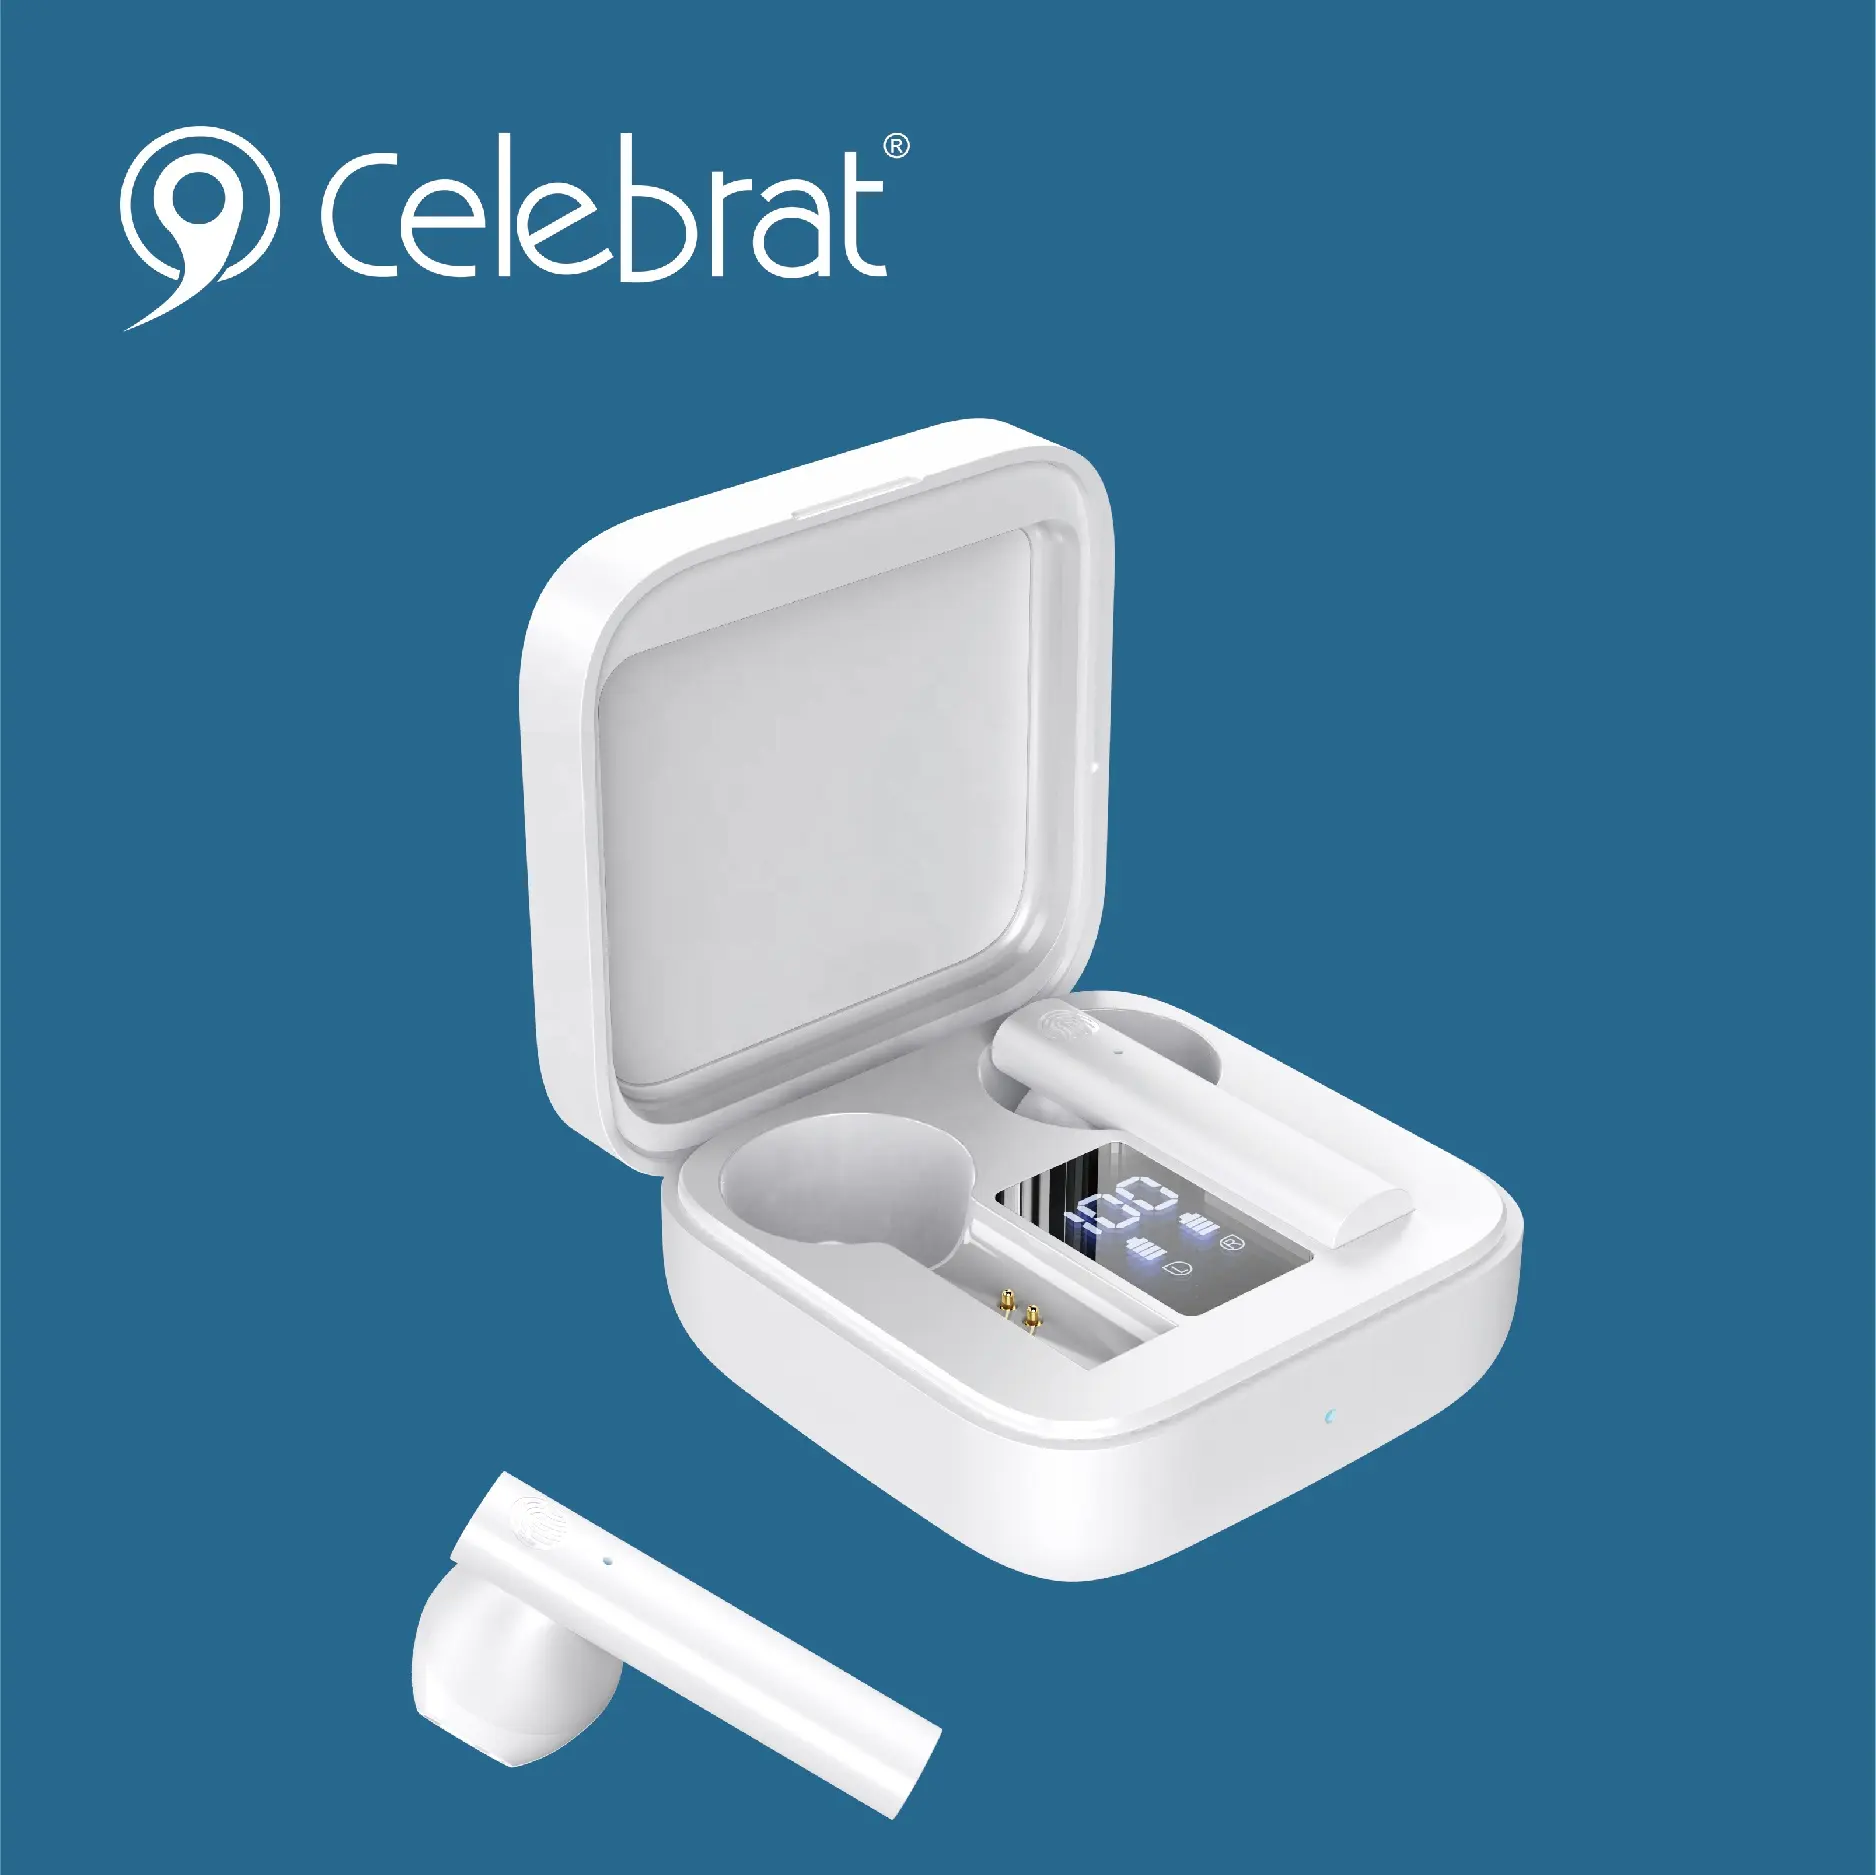 Celebethot-auriculares tws inalámbricos con pantalla LED, venta al por mayor, envío gratis